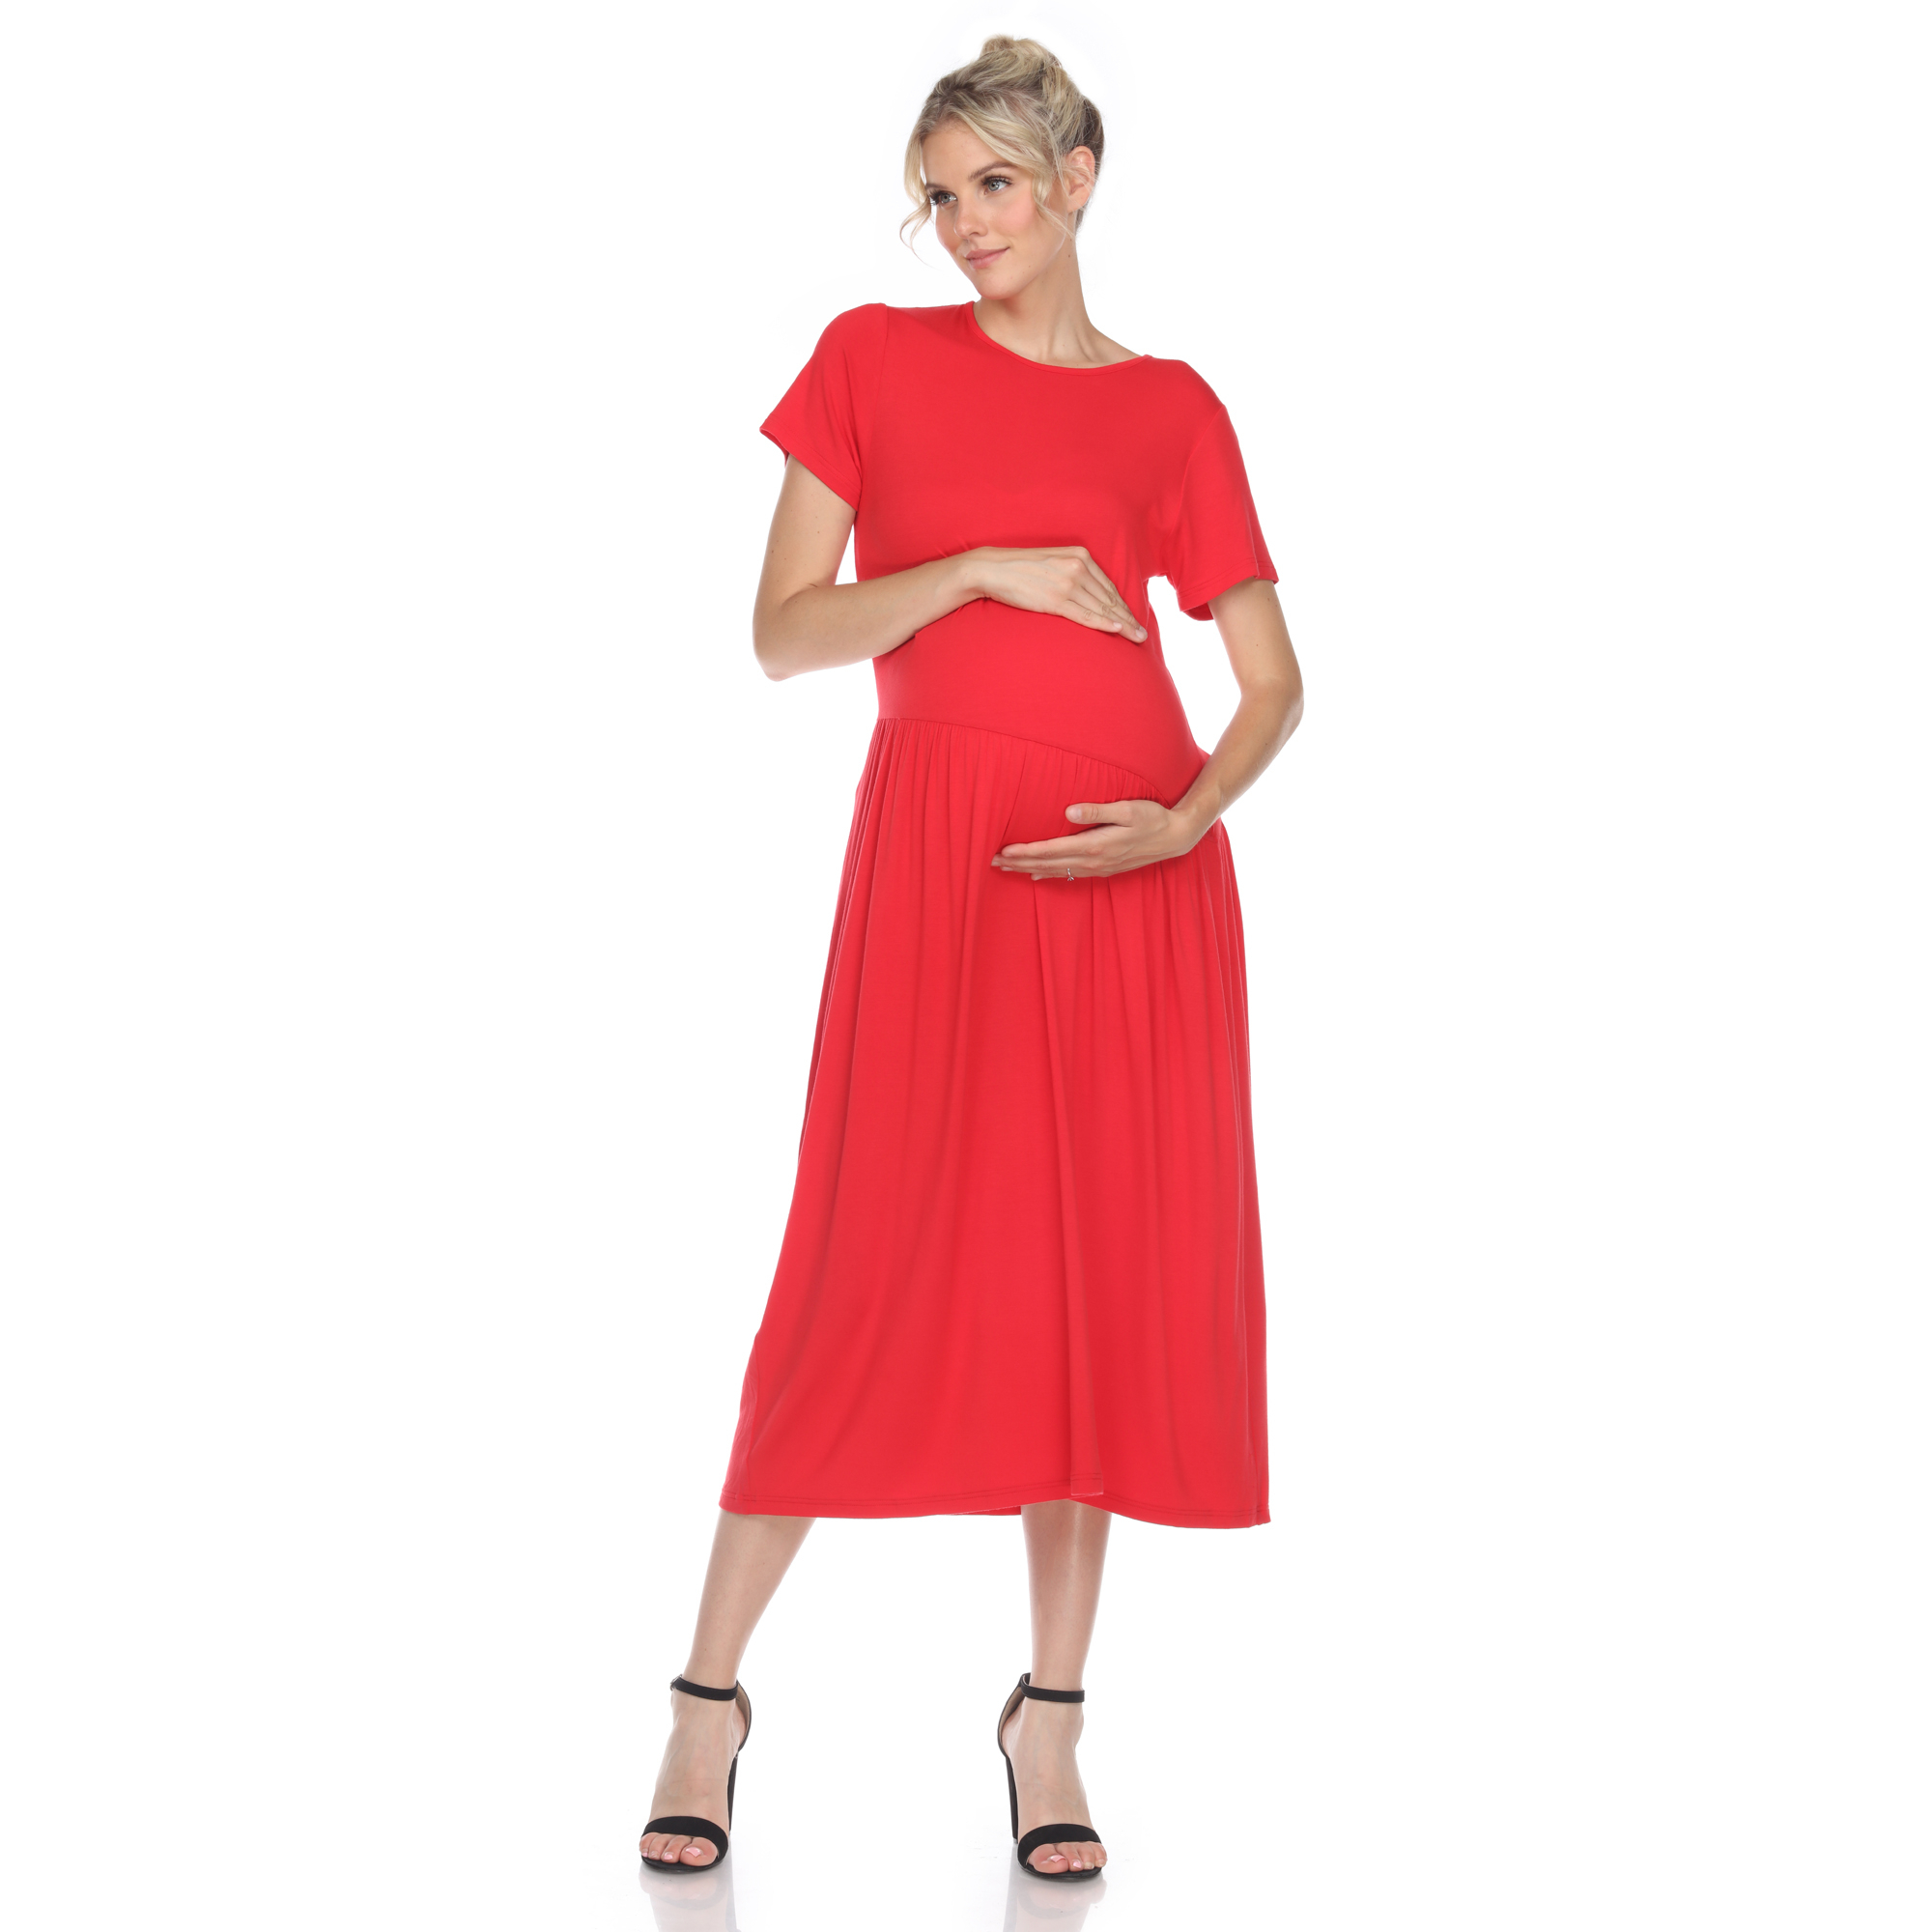 White Mark Womenâs Maternity Short Sleeve Maxi Dress - Red, 2X